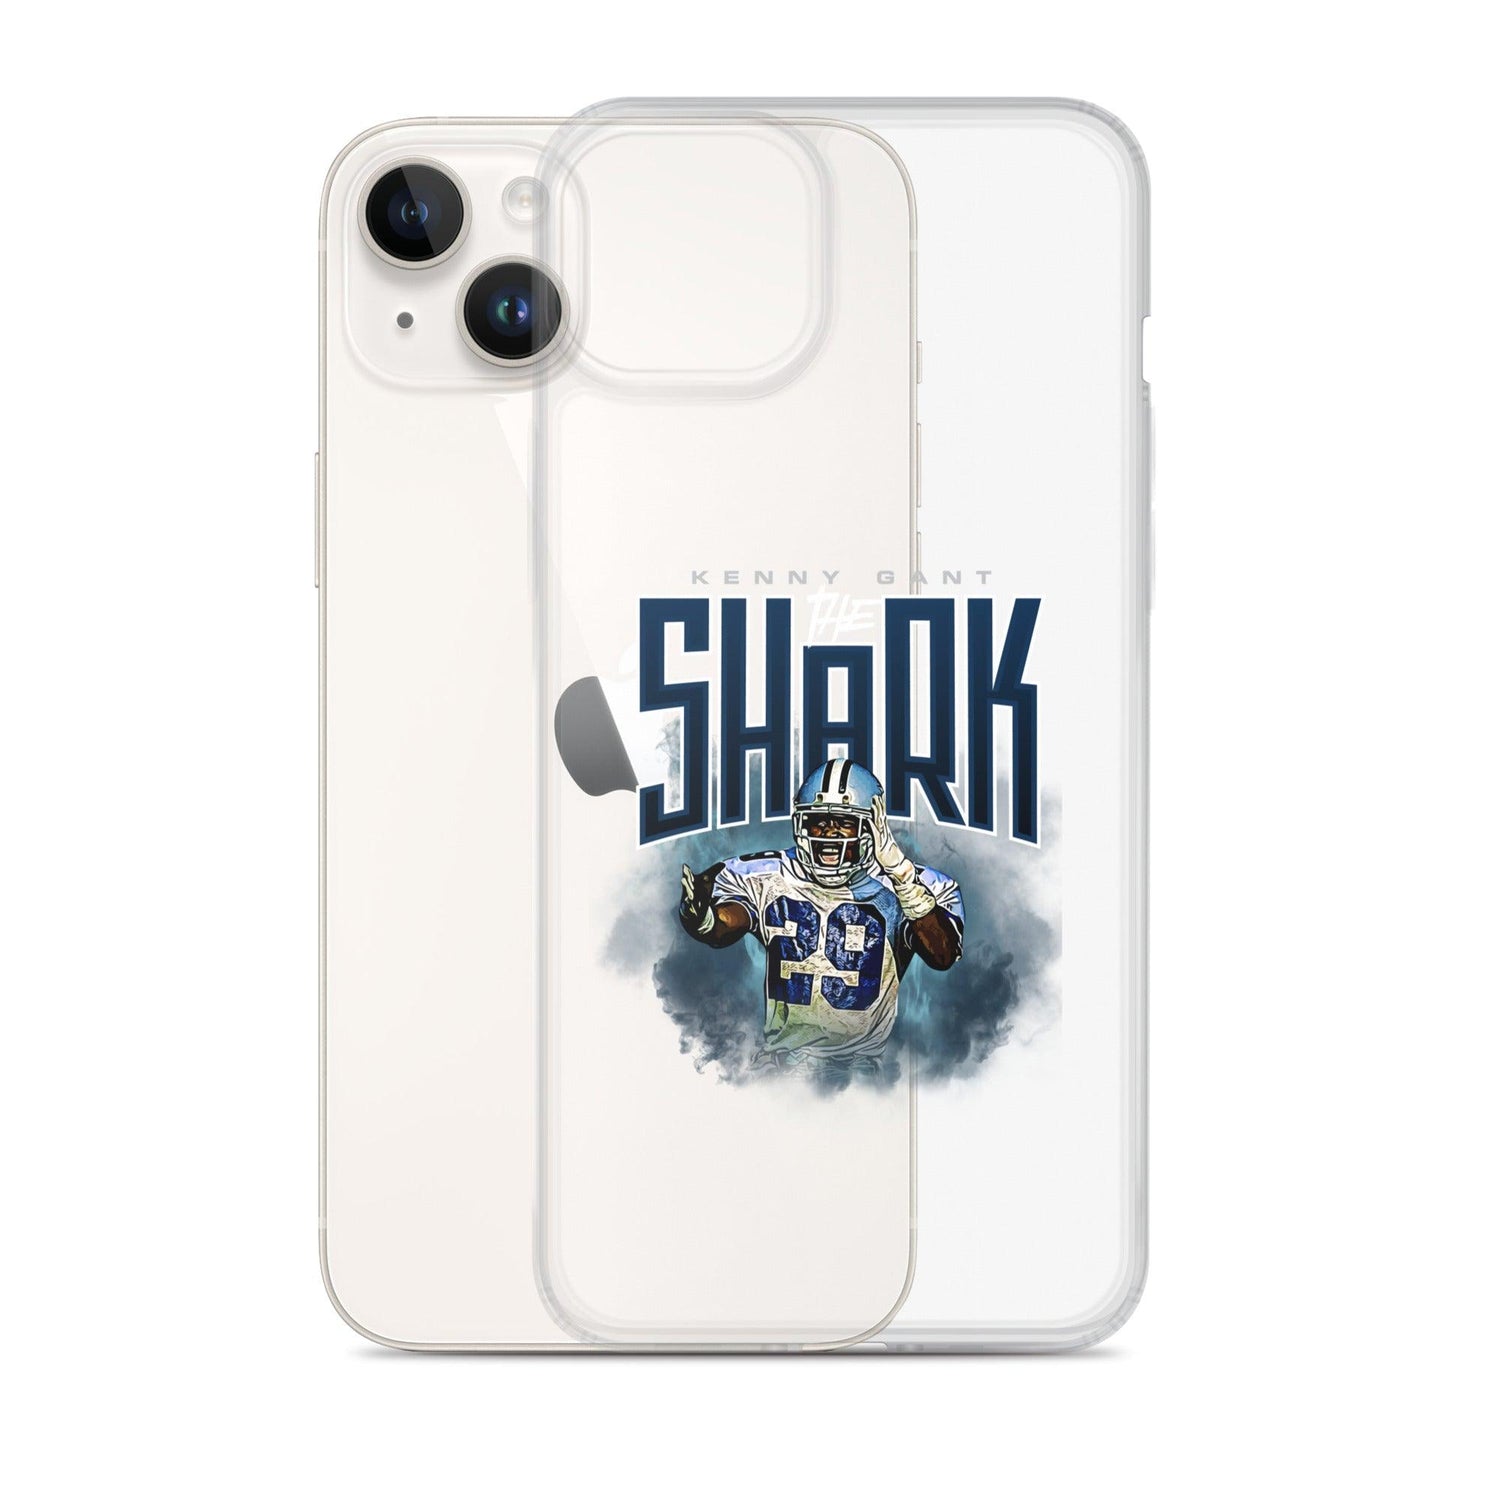 Kenny Gant "The Shark" iPhone® - Fan Arch